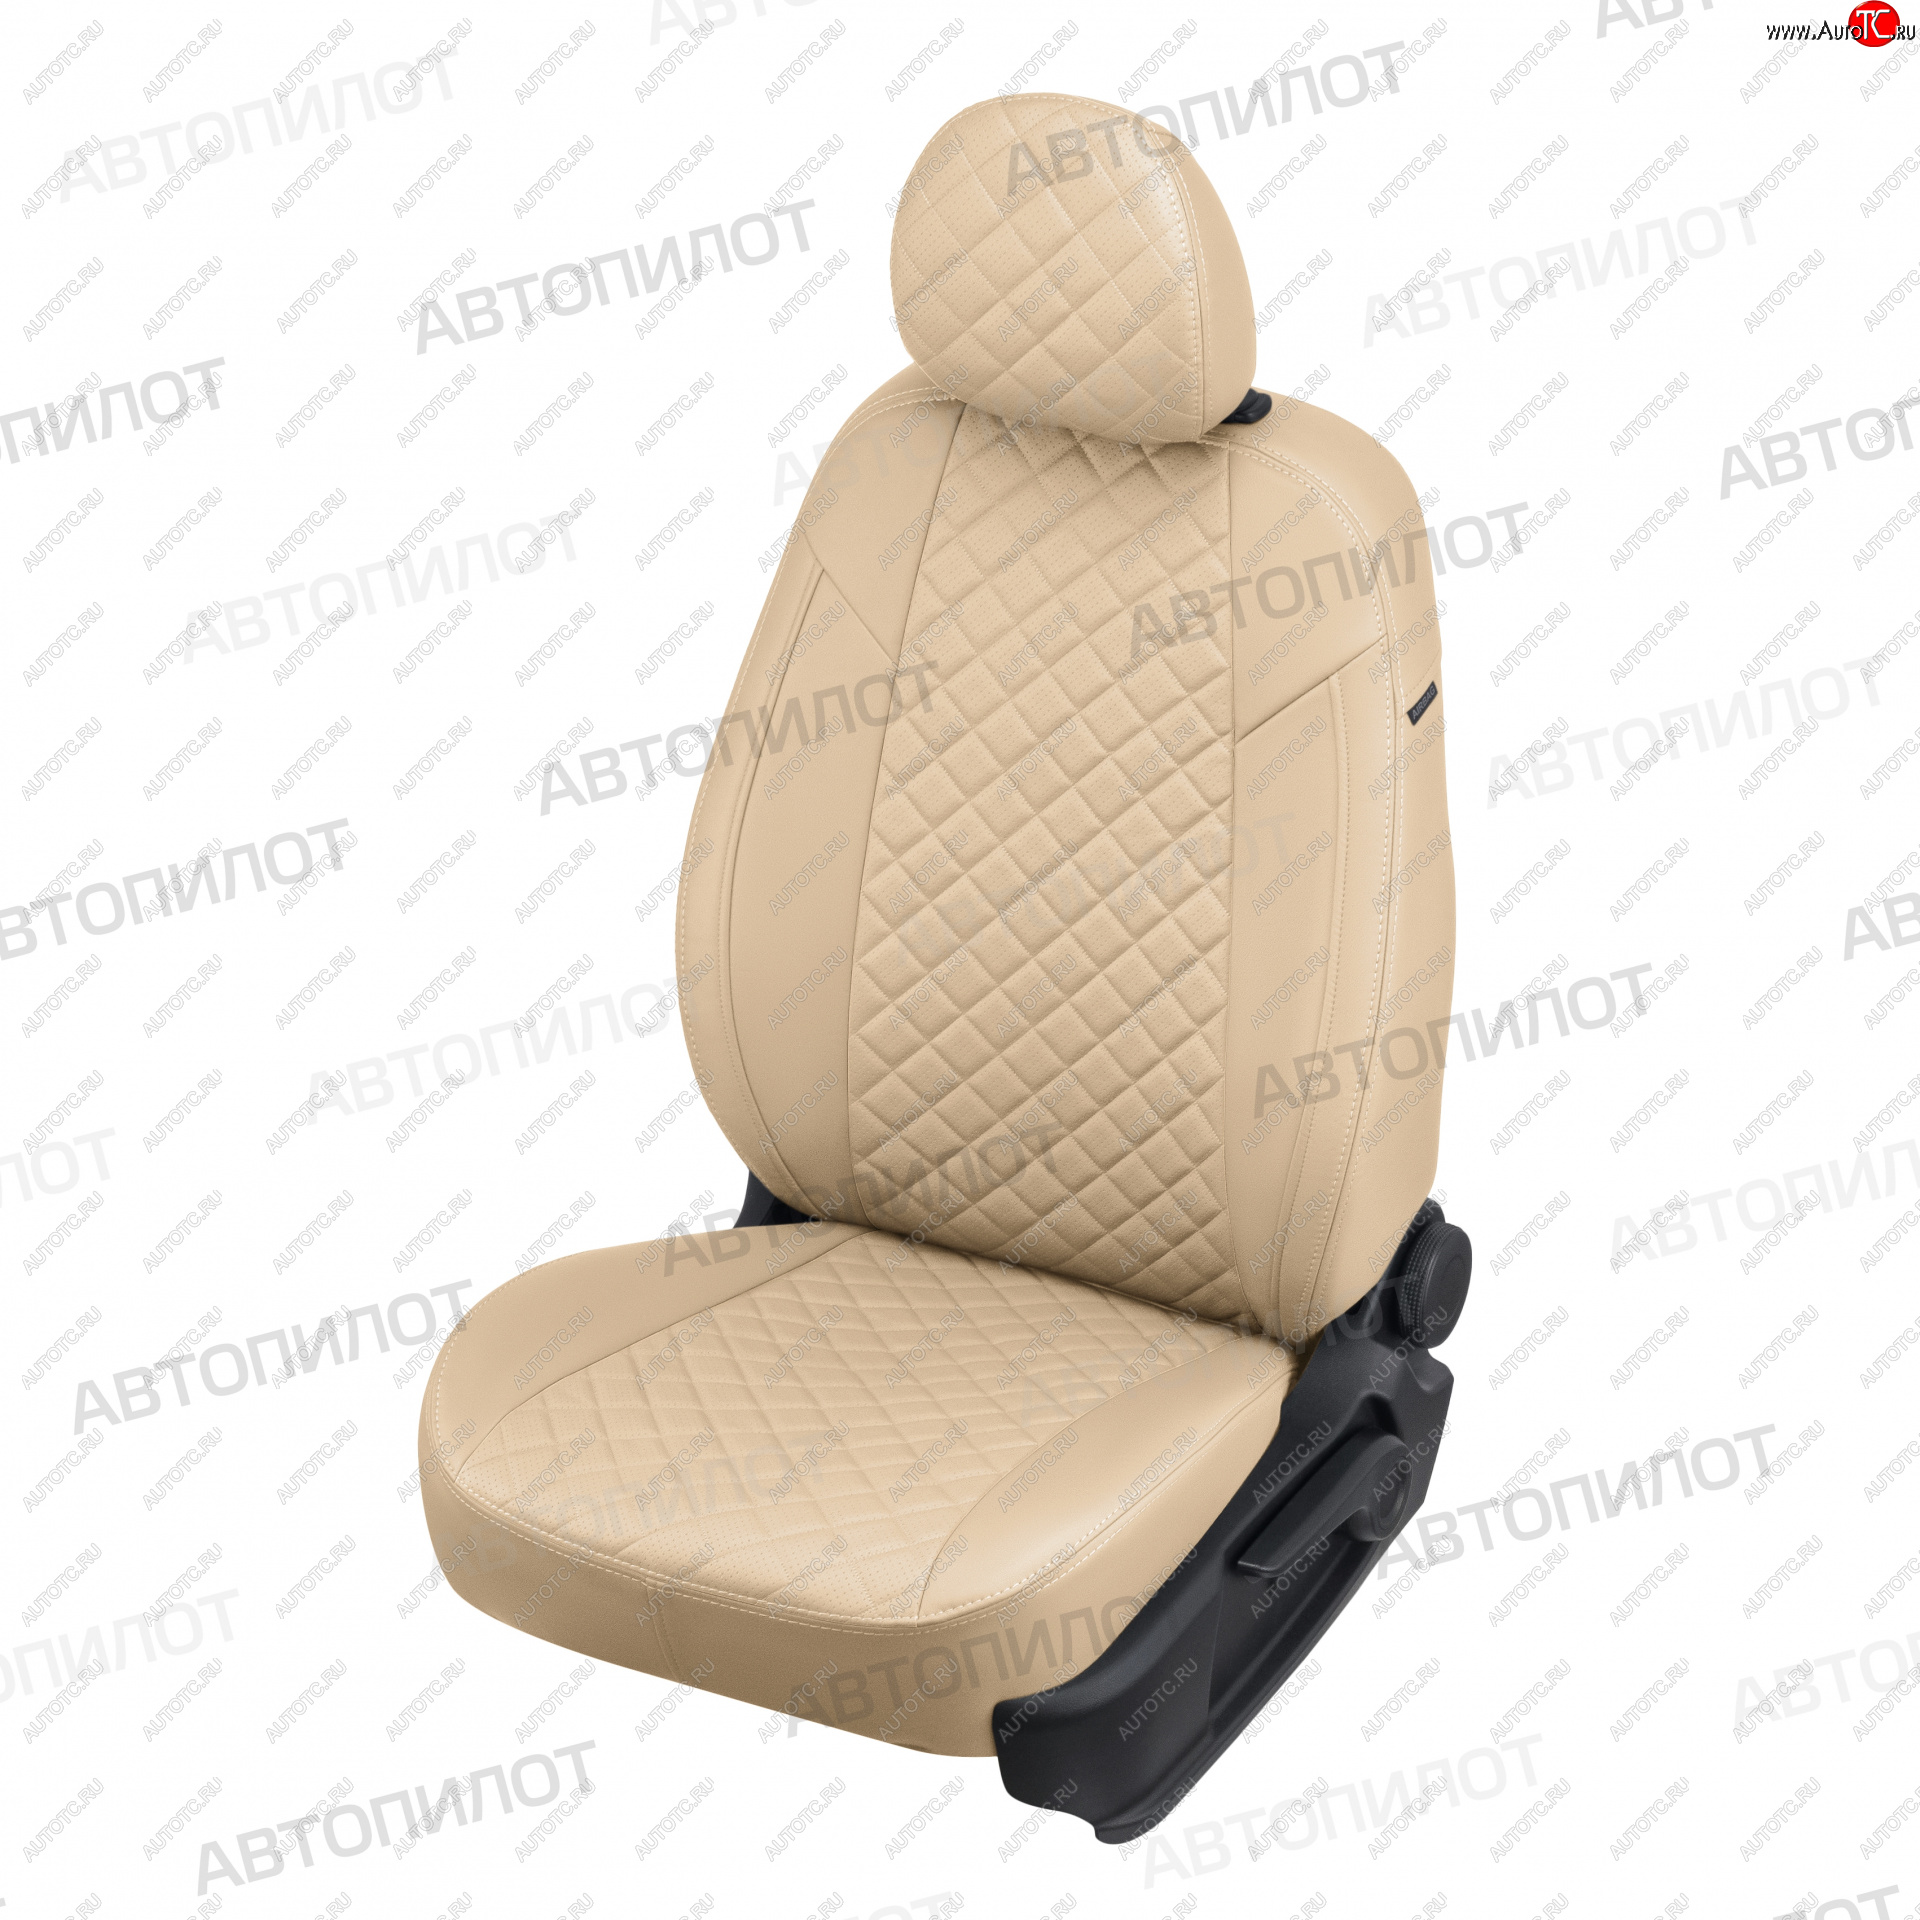 13 999 р. Чехлы сидений (5 мест, экокожа) Автопилот Ромб  Ford Galaxy  WGR (1995-2006) (бежевый)